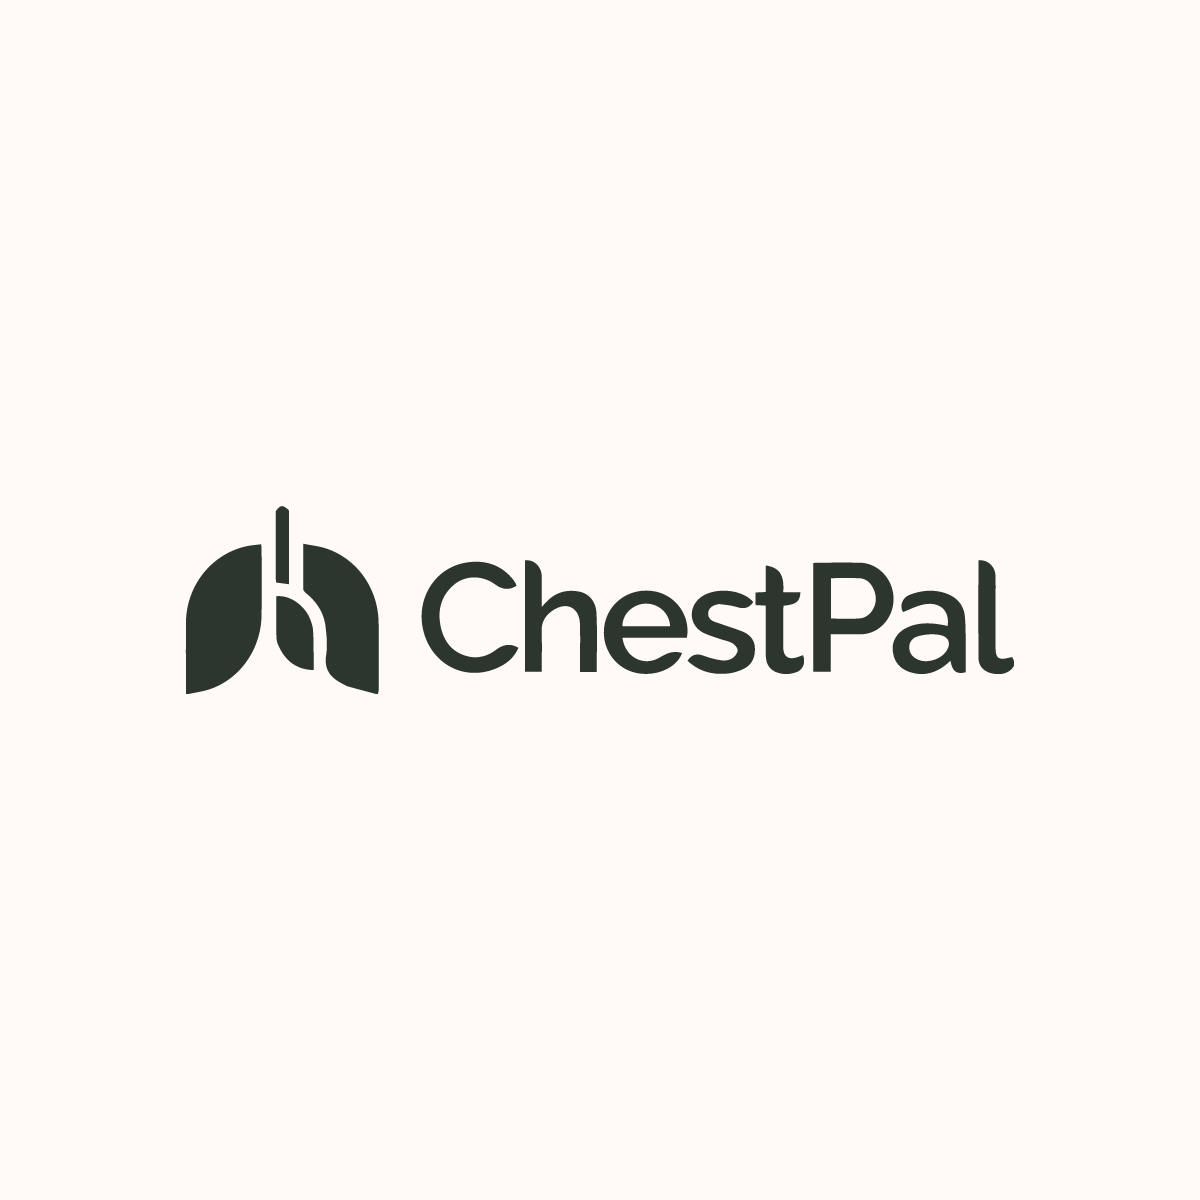 ChestPal